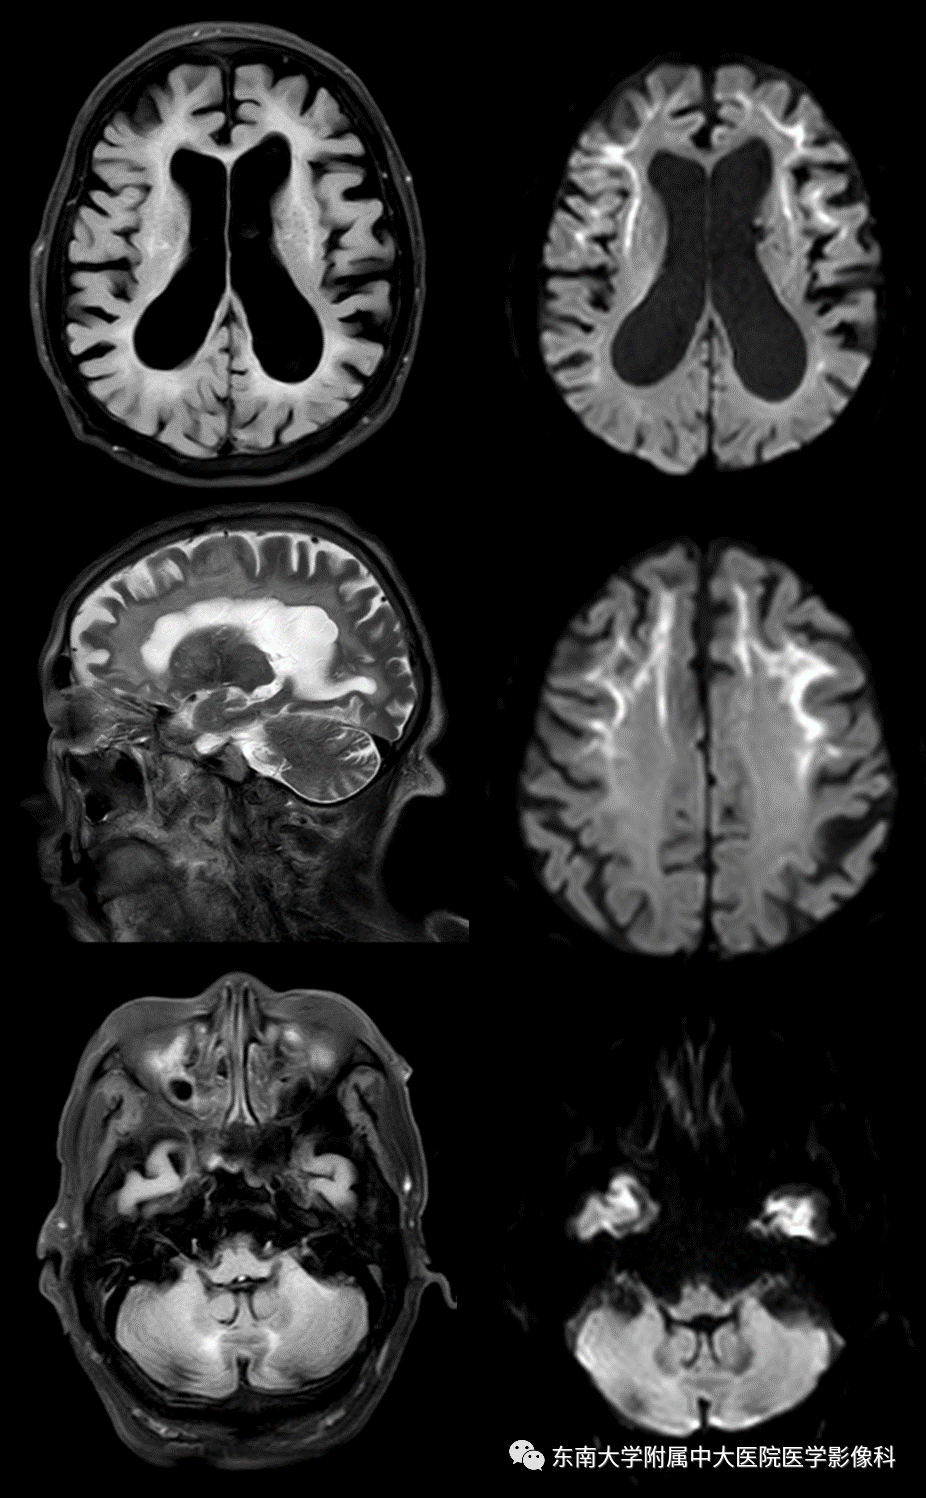 【PPT】神经元核内包涵体病（NIID）的影像学诊断-1